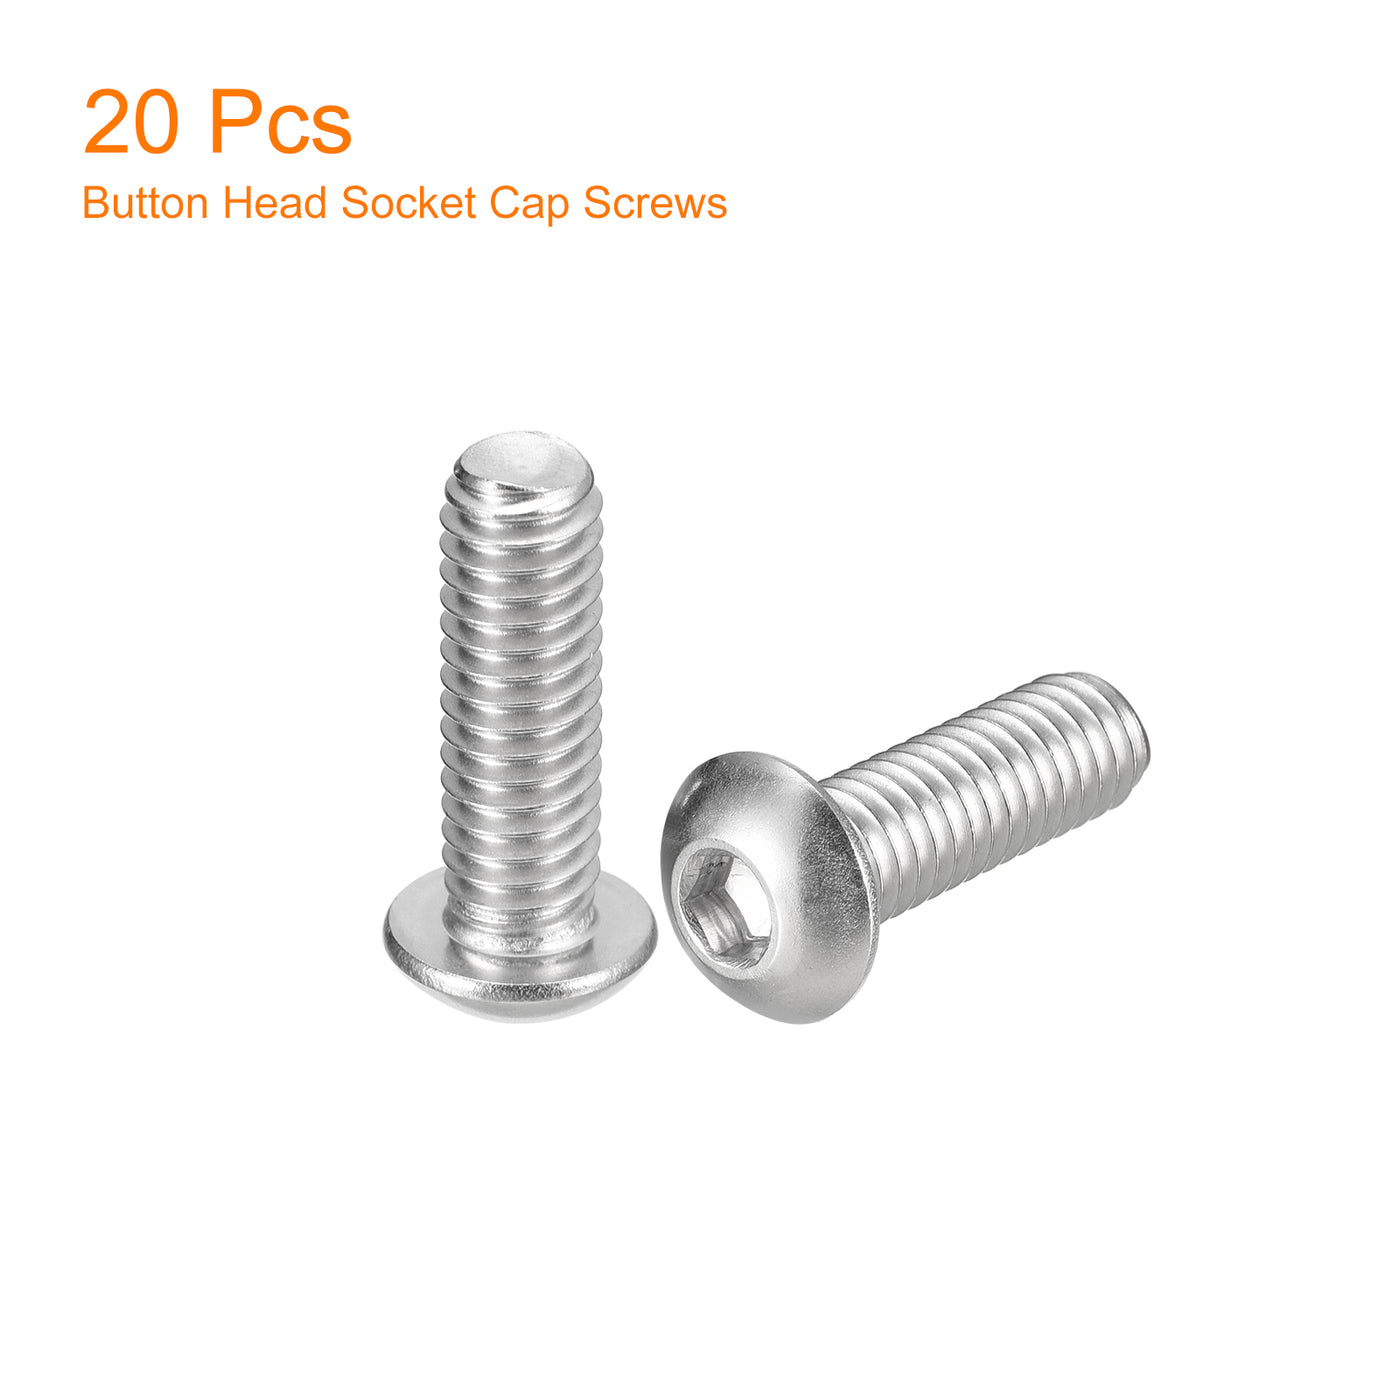 uxcell Uxcell 5/16-18x1" Button Head Socket Cap Screws, 20pcs 304 Stainless Steel Screws